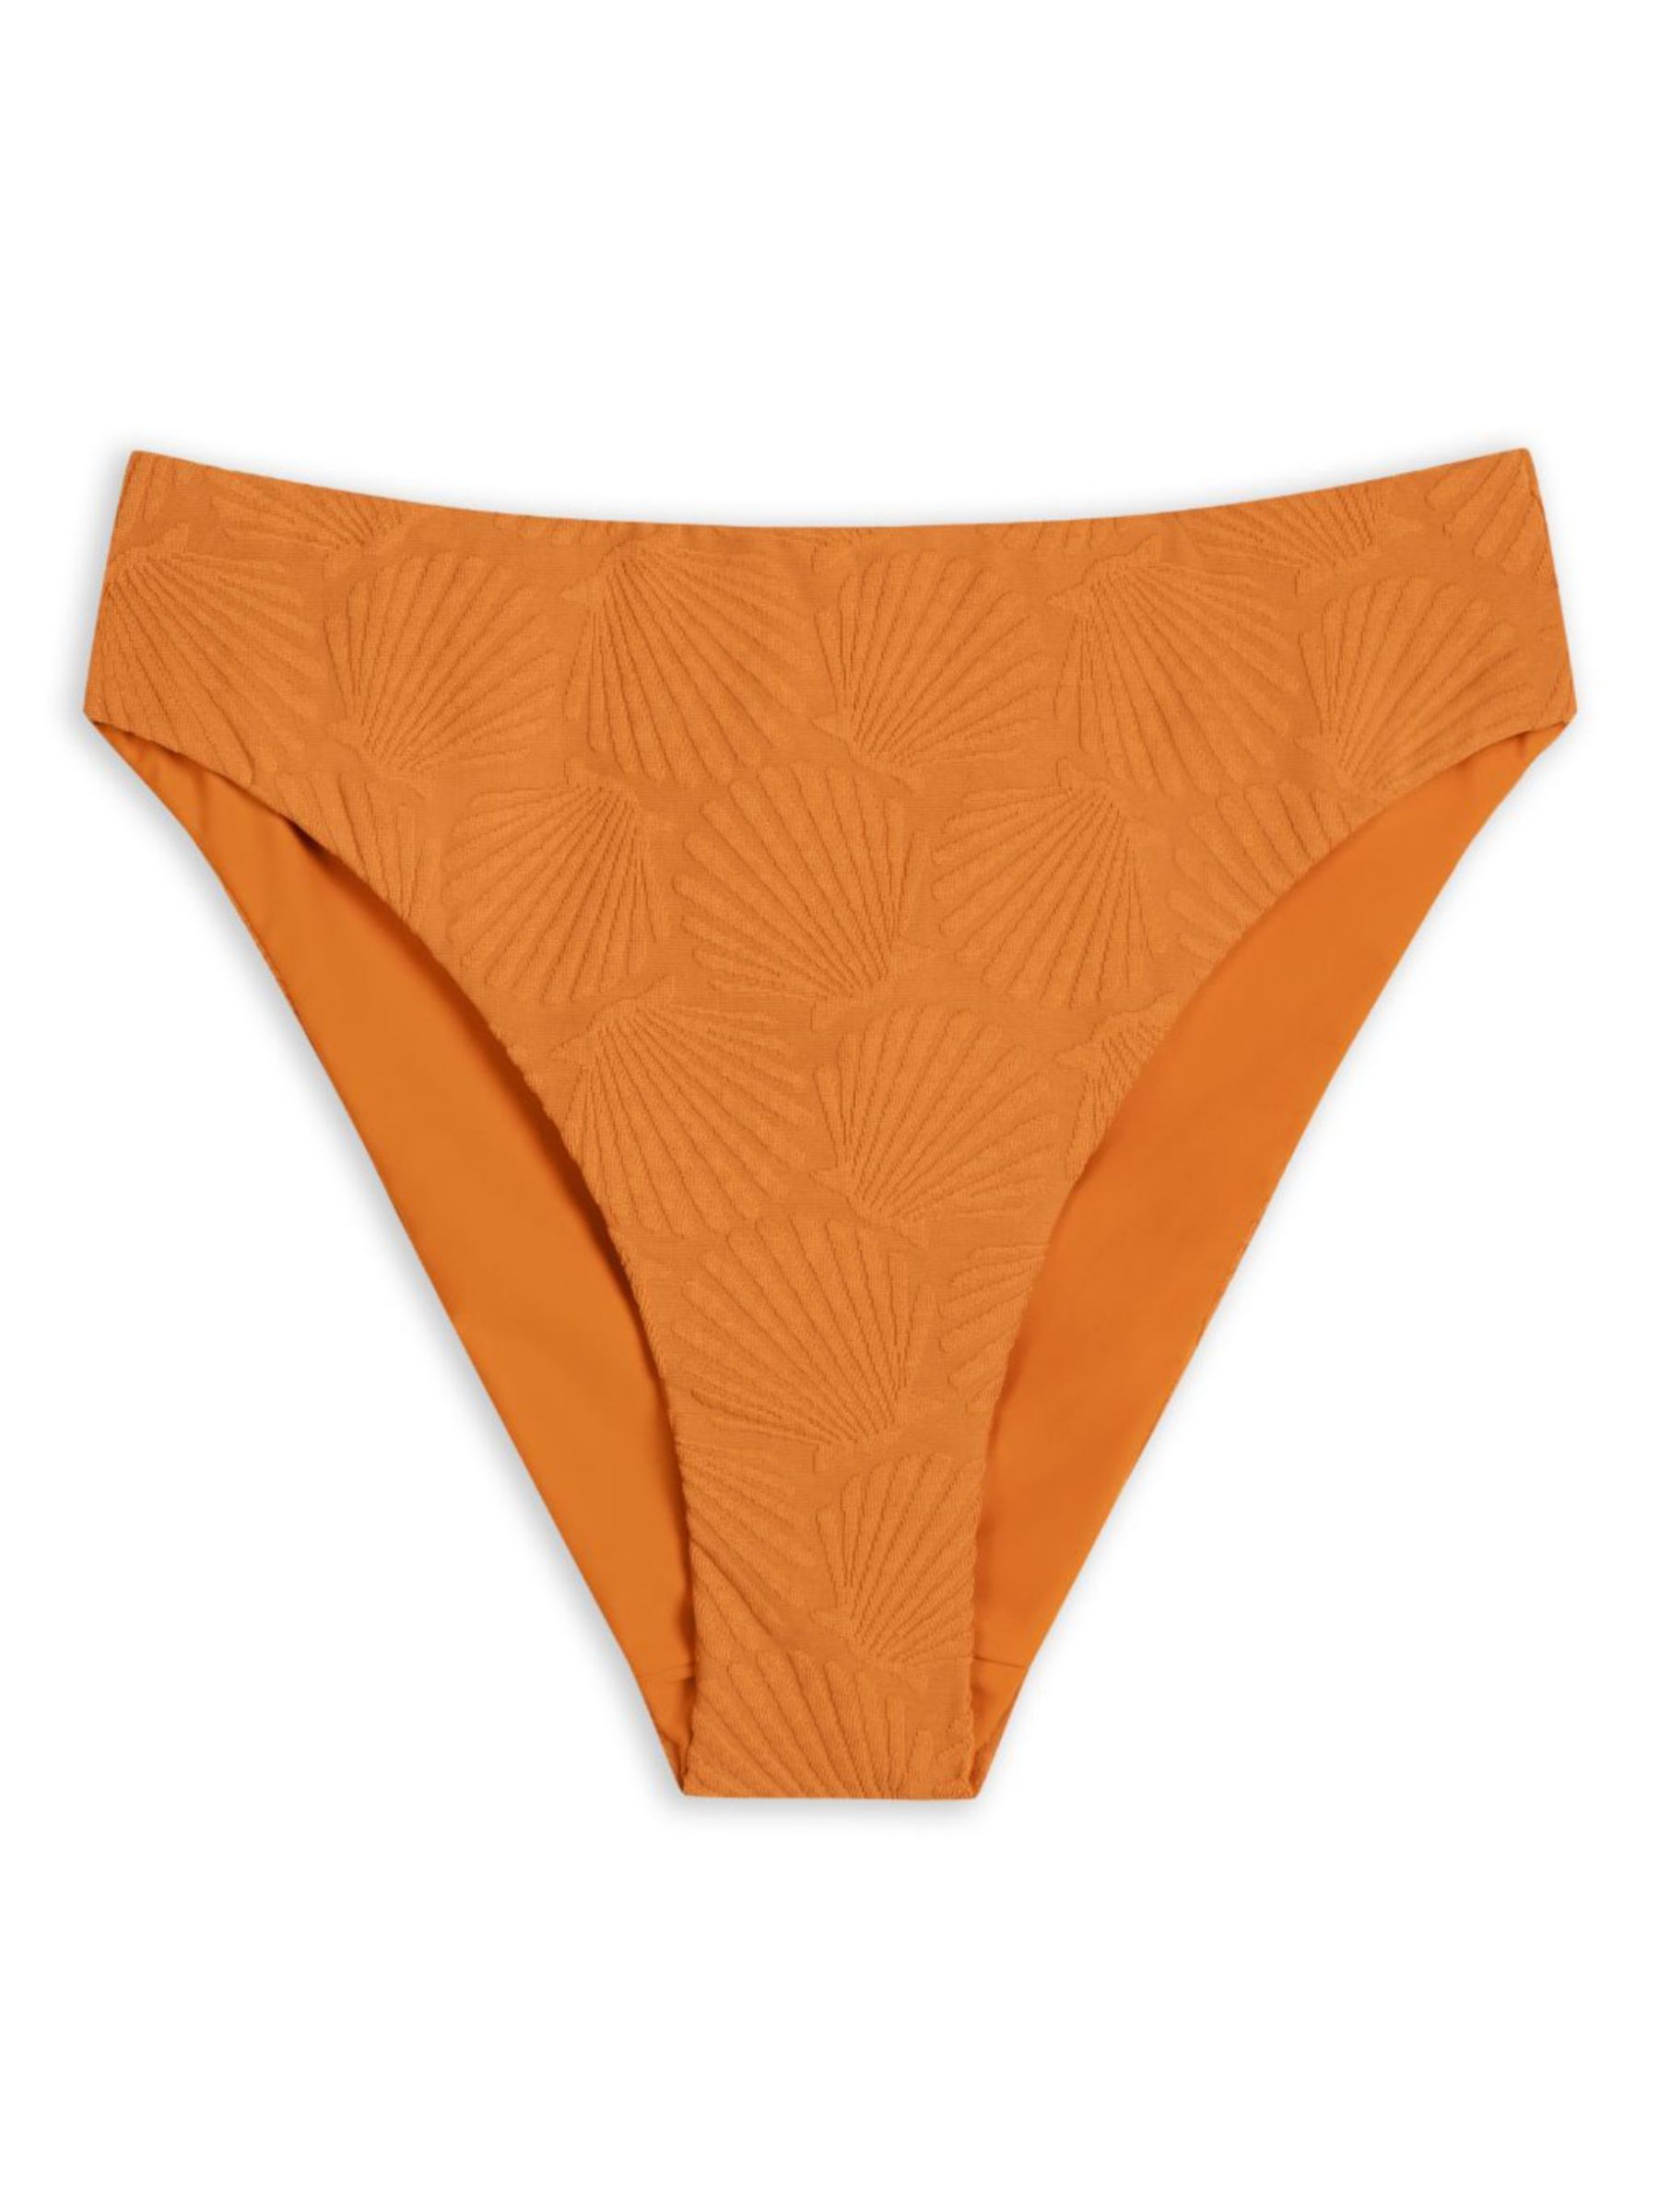 Chelsea Peers Jacquard Shell Reversible High Waist Bikini Bottoms, Orange, 6